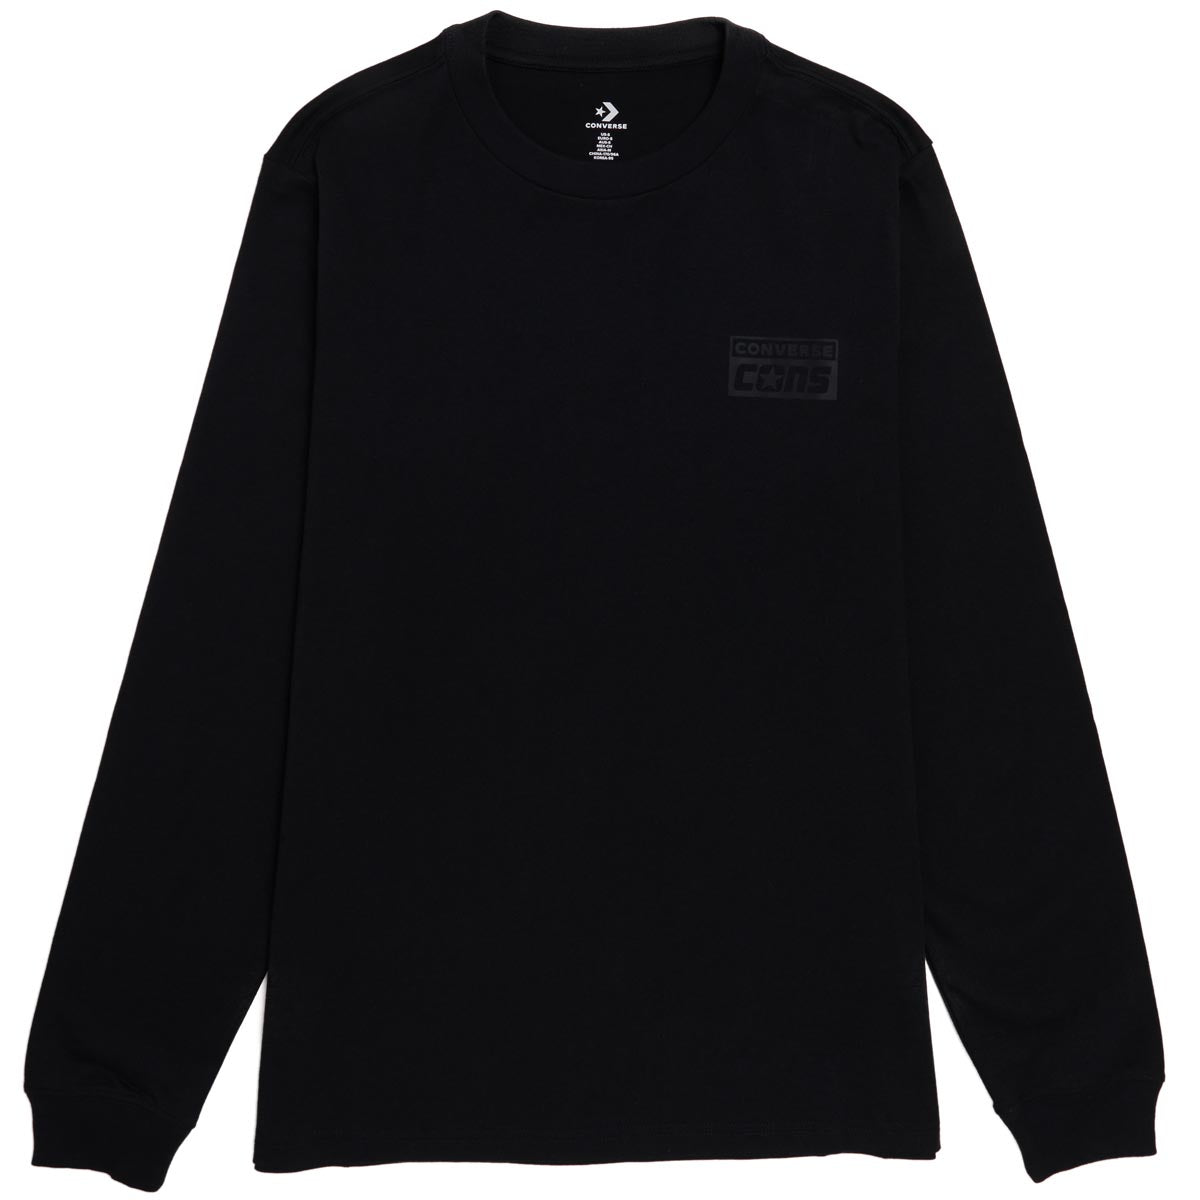 Converse Long Sleeve T-Shirt - Black image 1